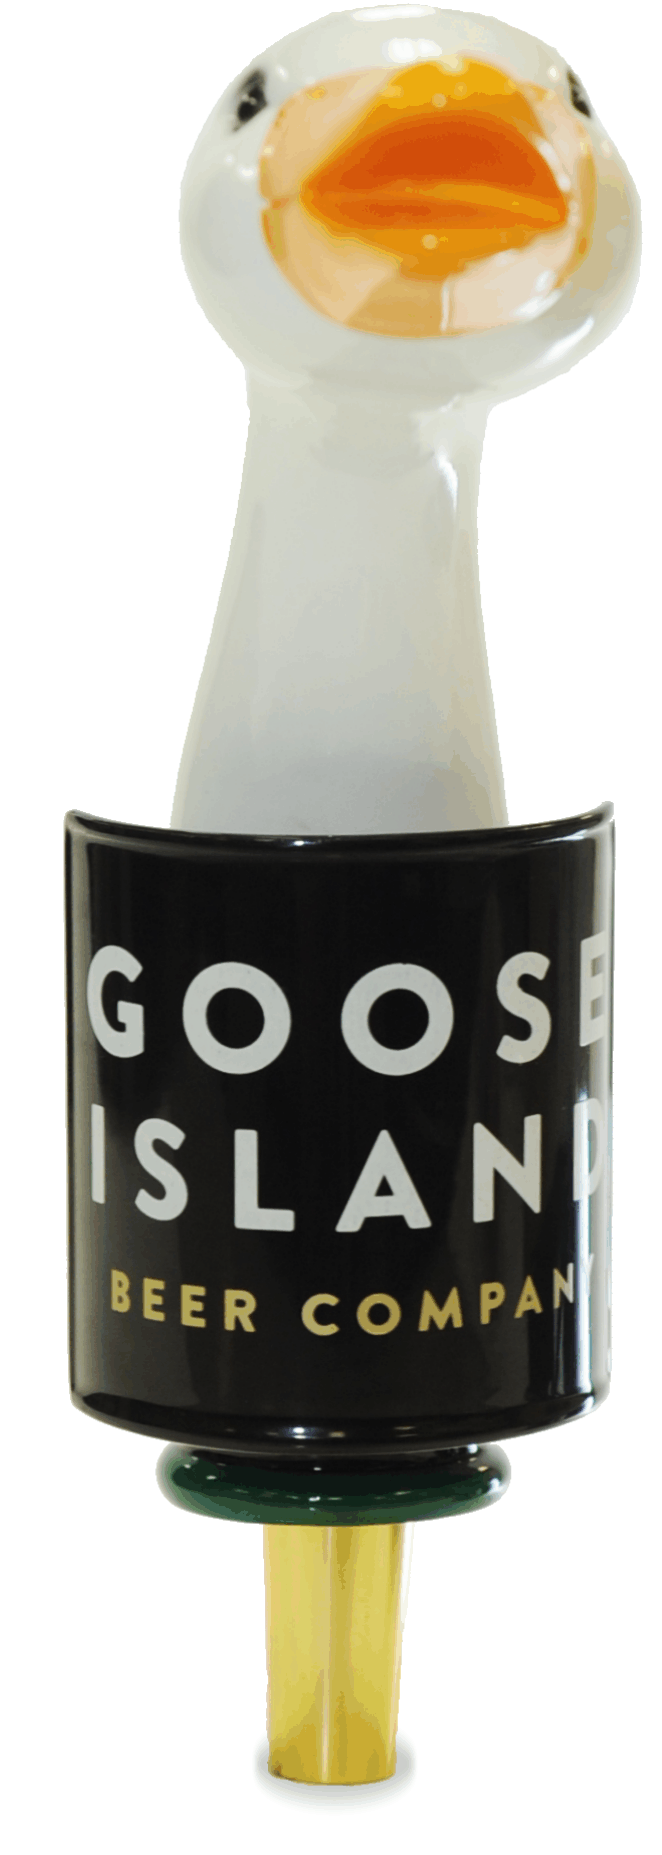 Goose Island IPA